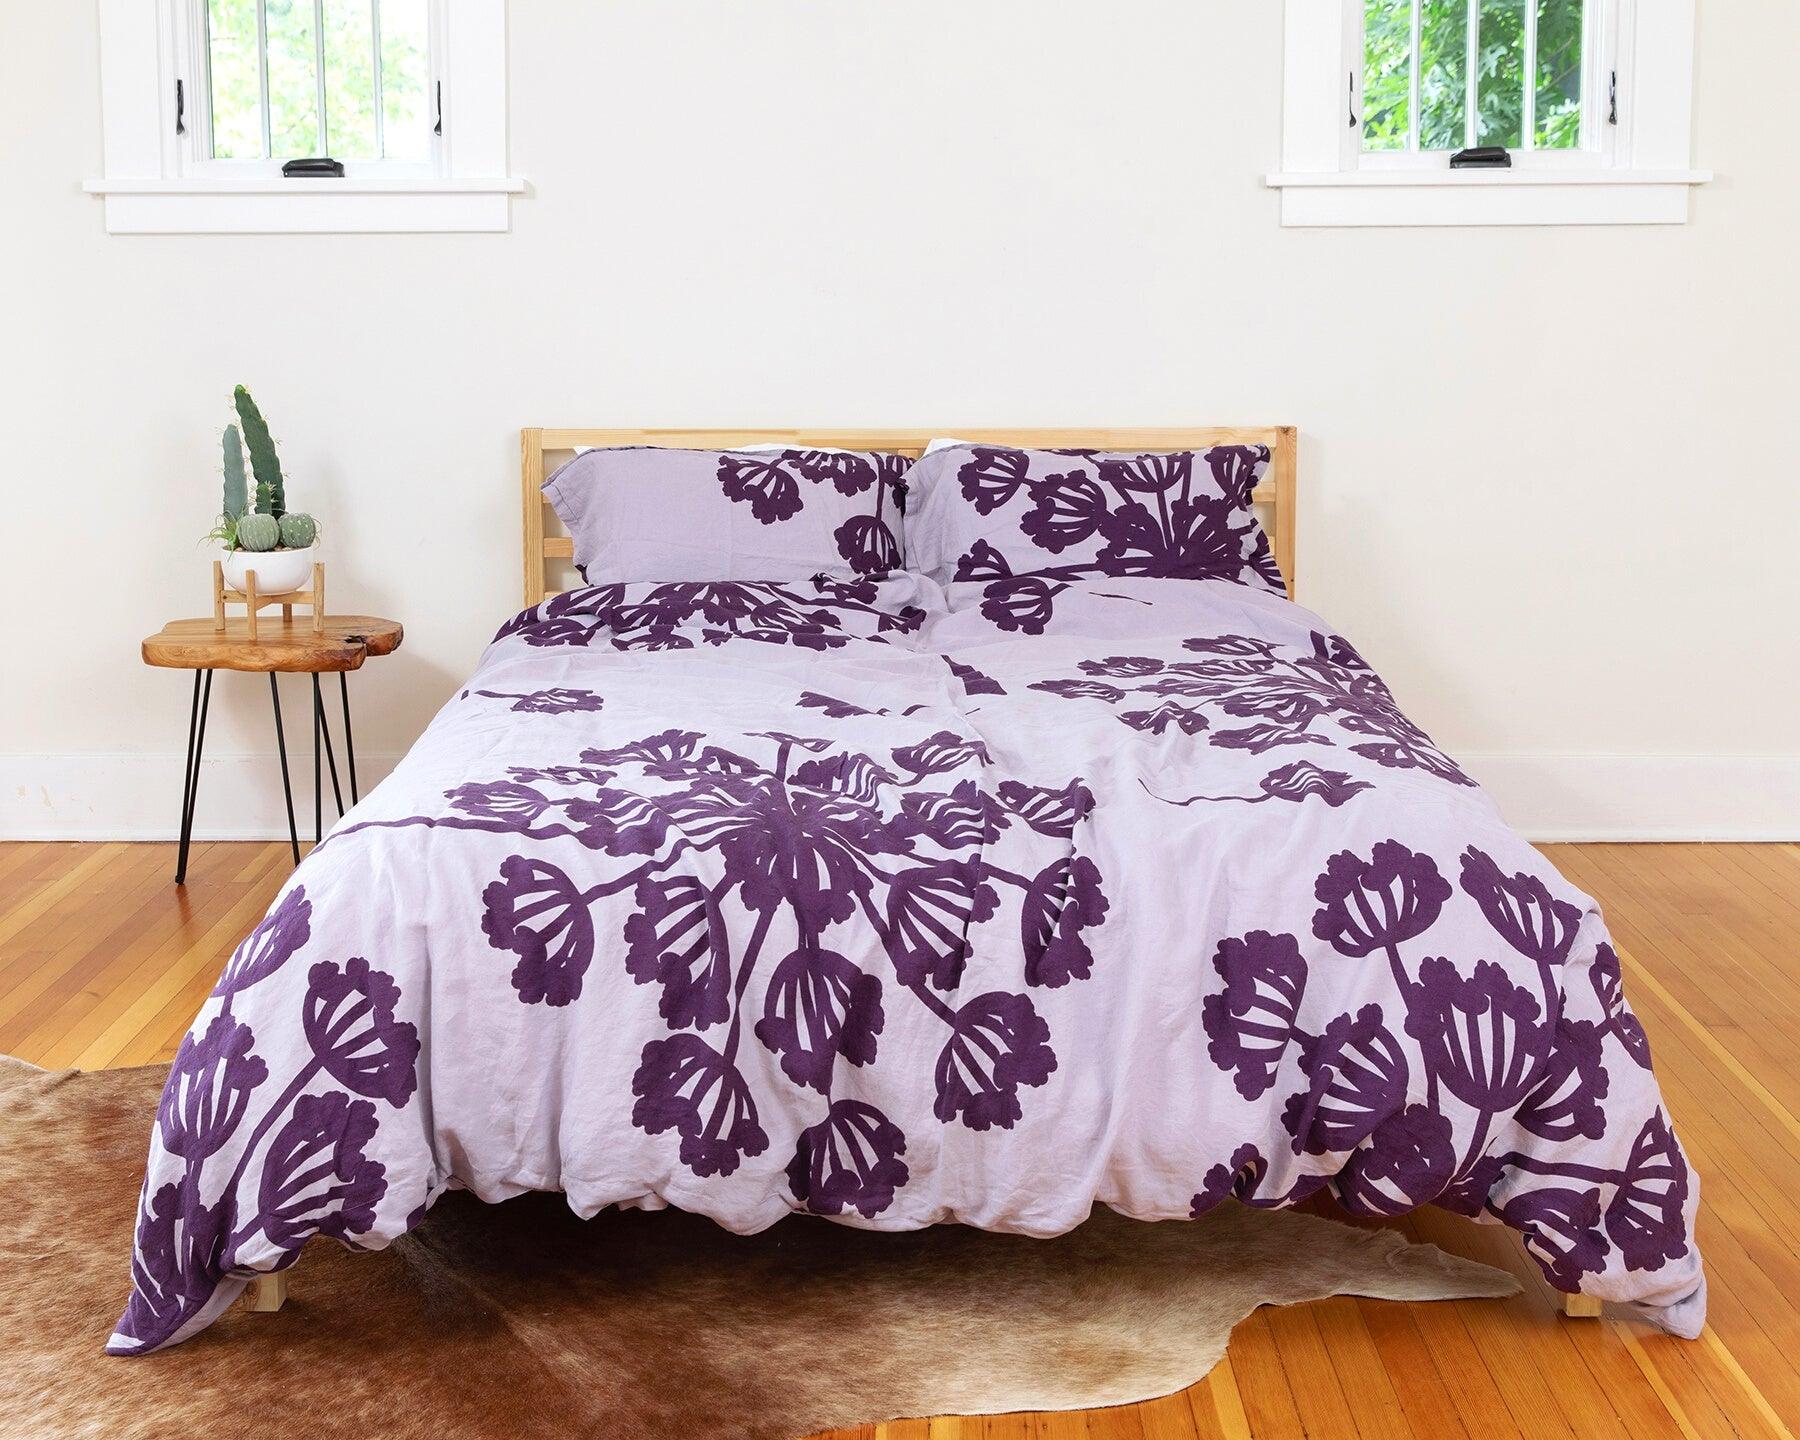 Purple organic European linen duvet cover set with two matching pillow cases in modern Scandinavian floral design - Twin / Standard, Full/Queen / Standard, King/Cal-King / Standard, King/Cal-King / King